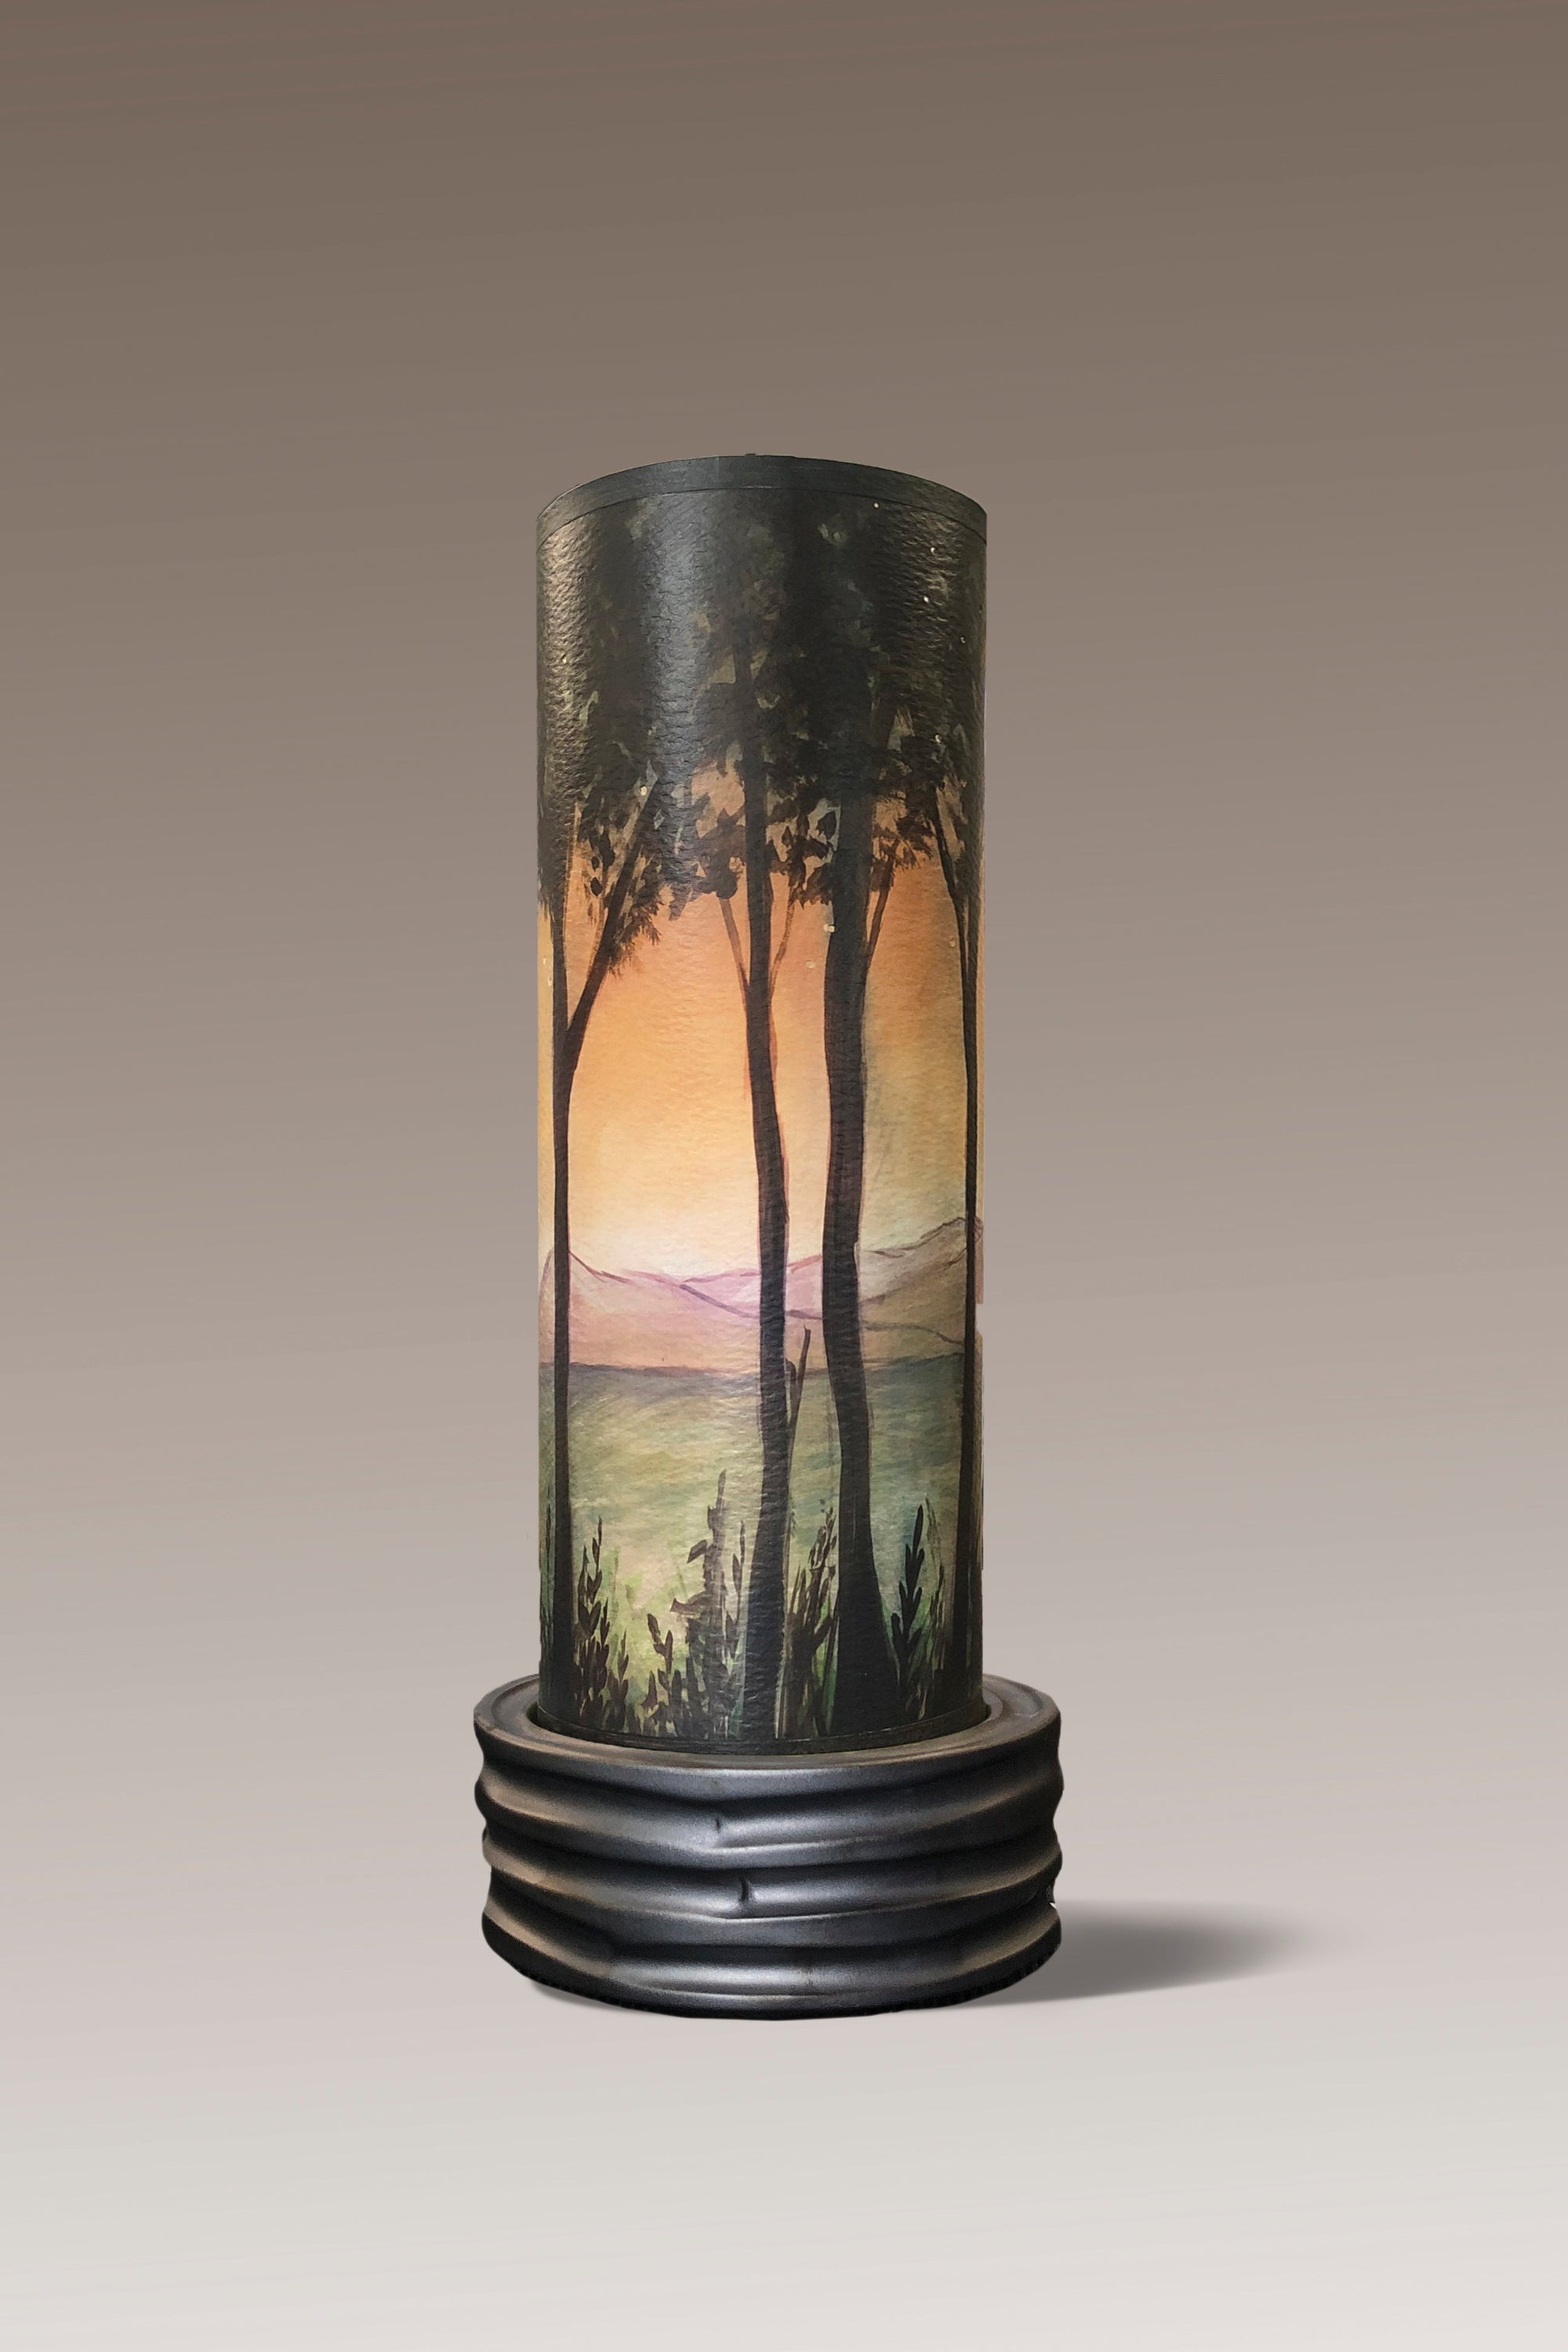 Janna Ugone & Co Luminaires Ceramic Luminaire Accent Lamp with Dawn Shade